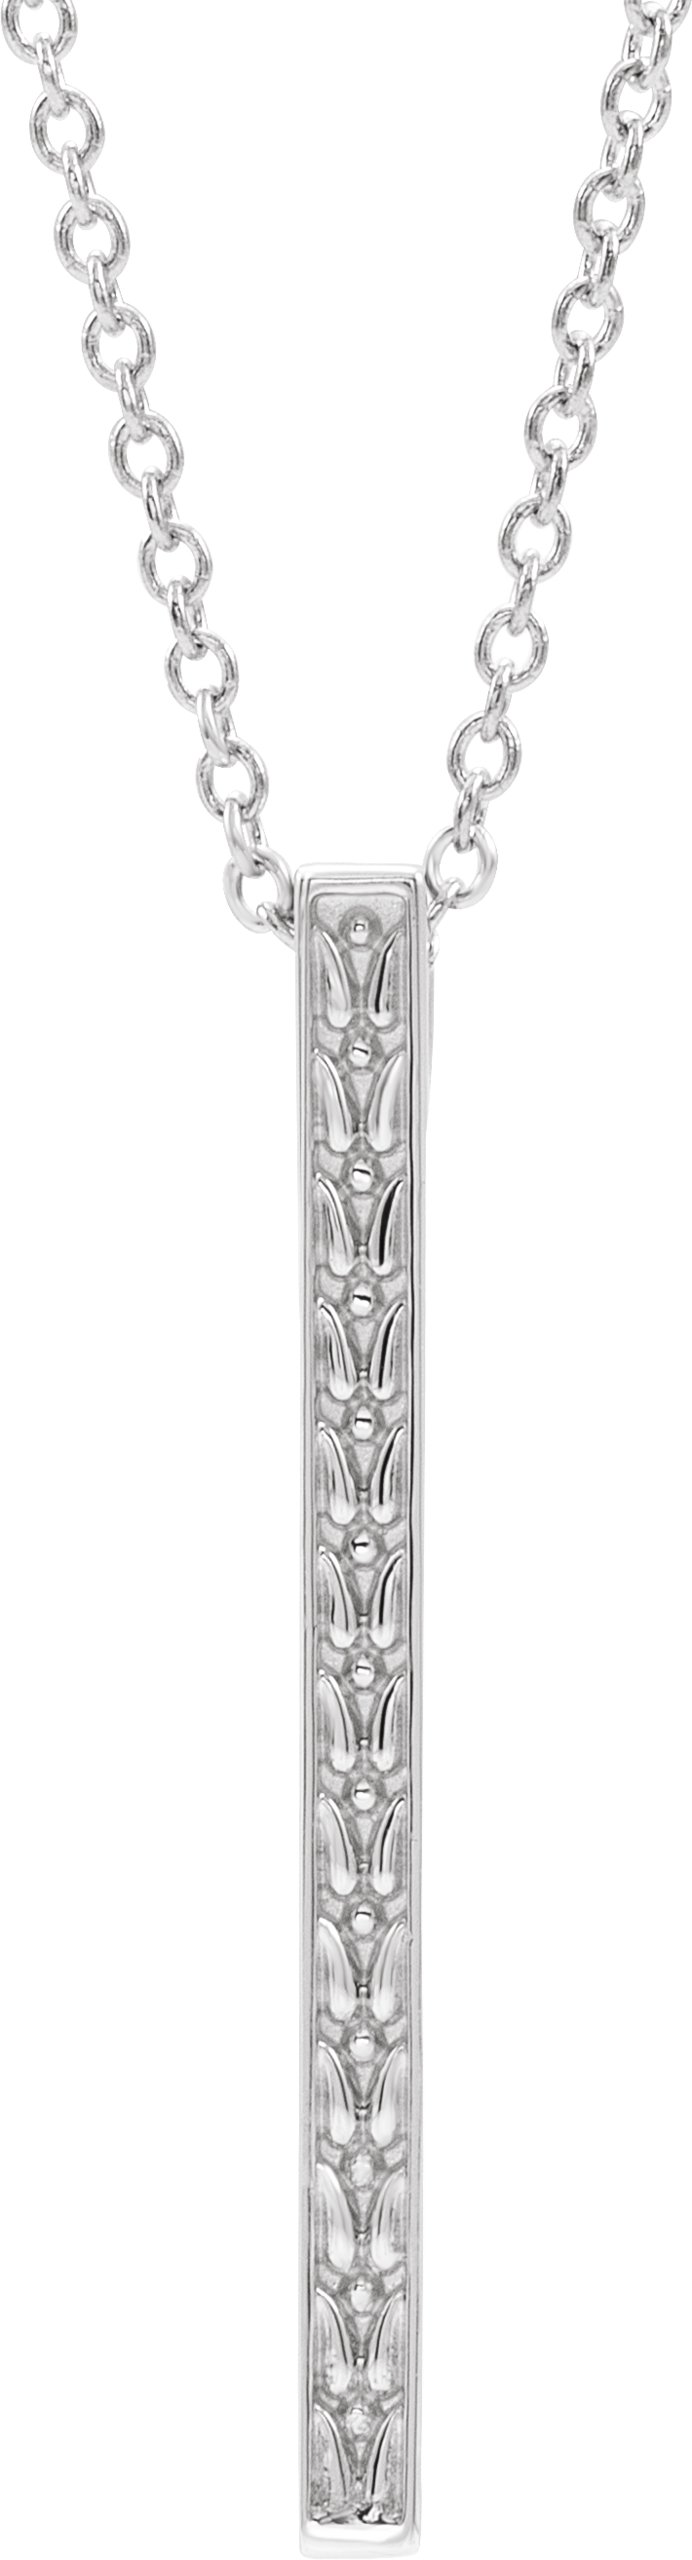 14K White Sculptural-Inspired Bar 24" Necklace